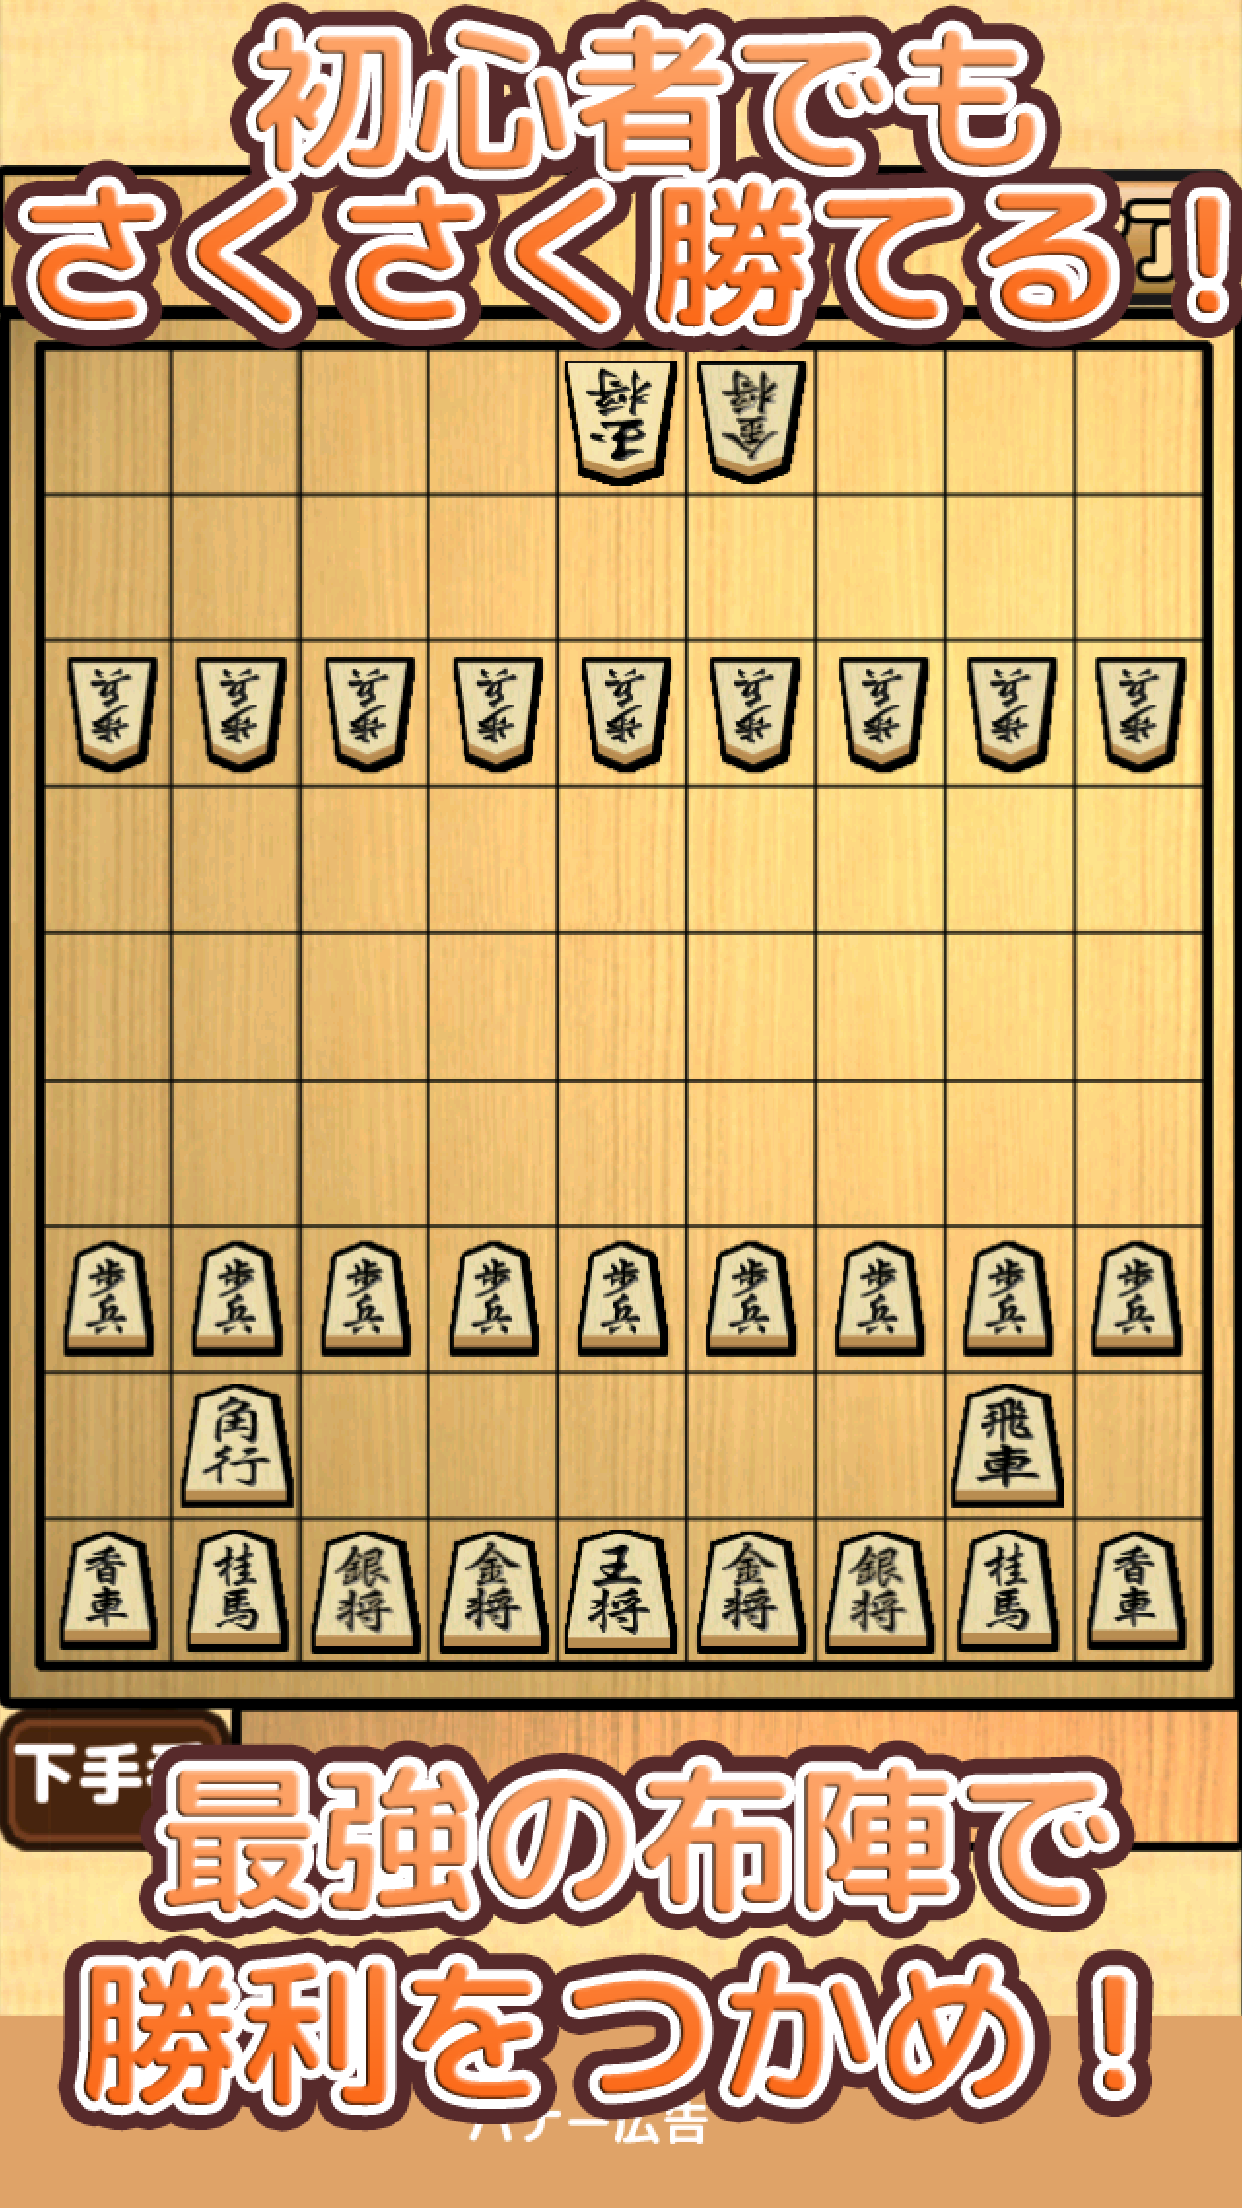 Screenshot 1 of 將棋入門 - 即使是初學者也能輕鬆獲勝的簡單的將棋遊戲 0.1.6